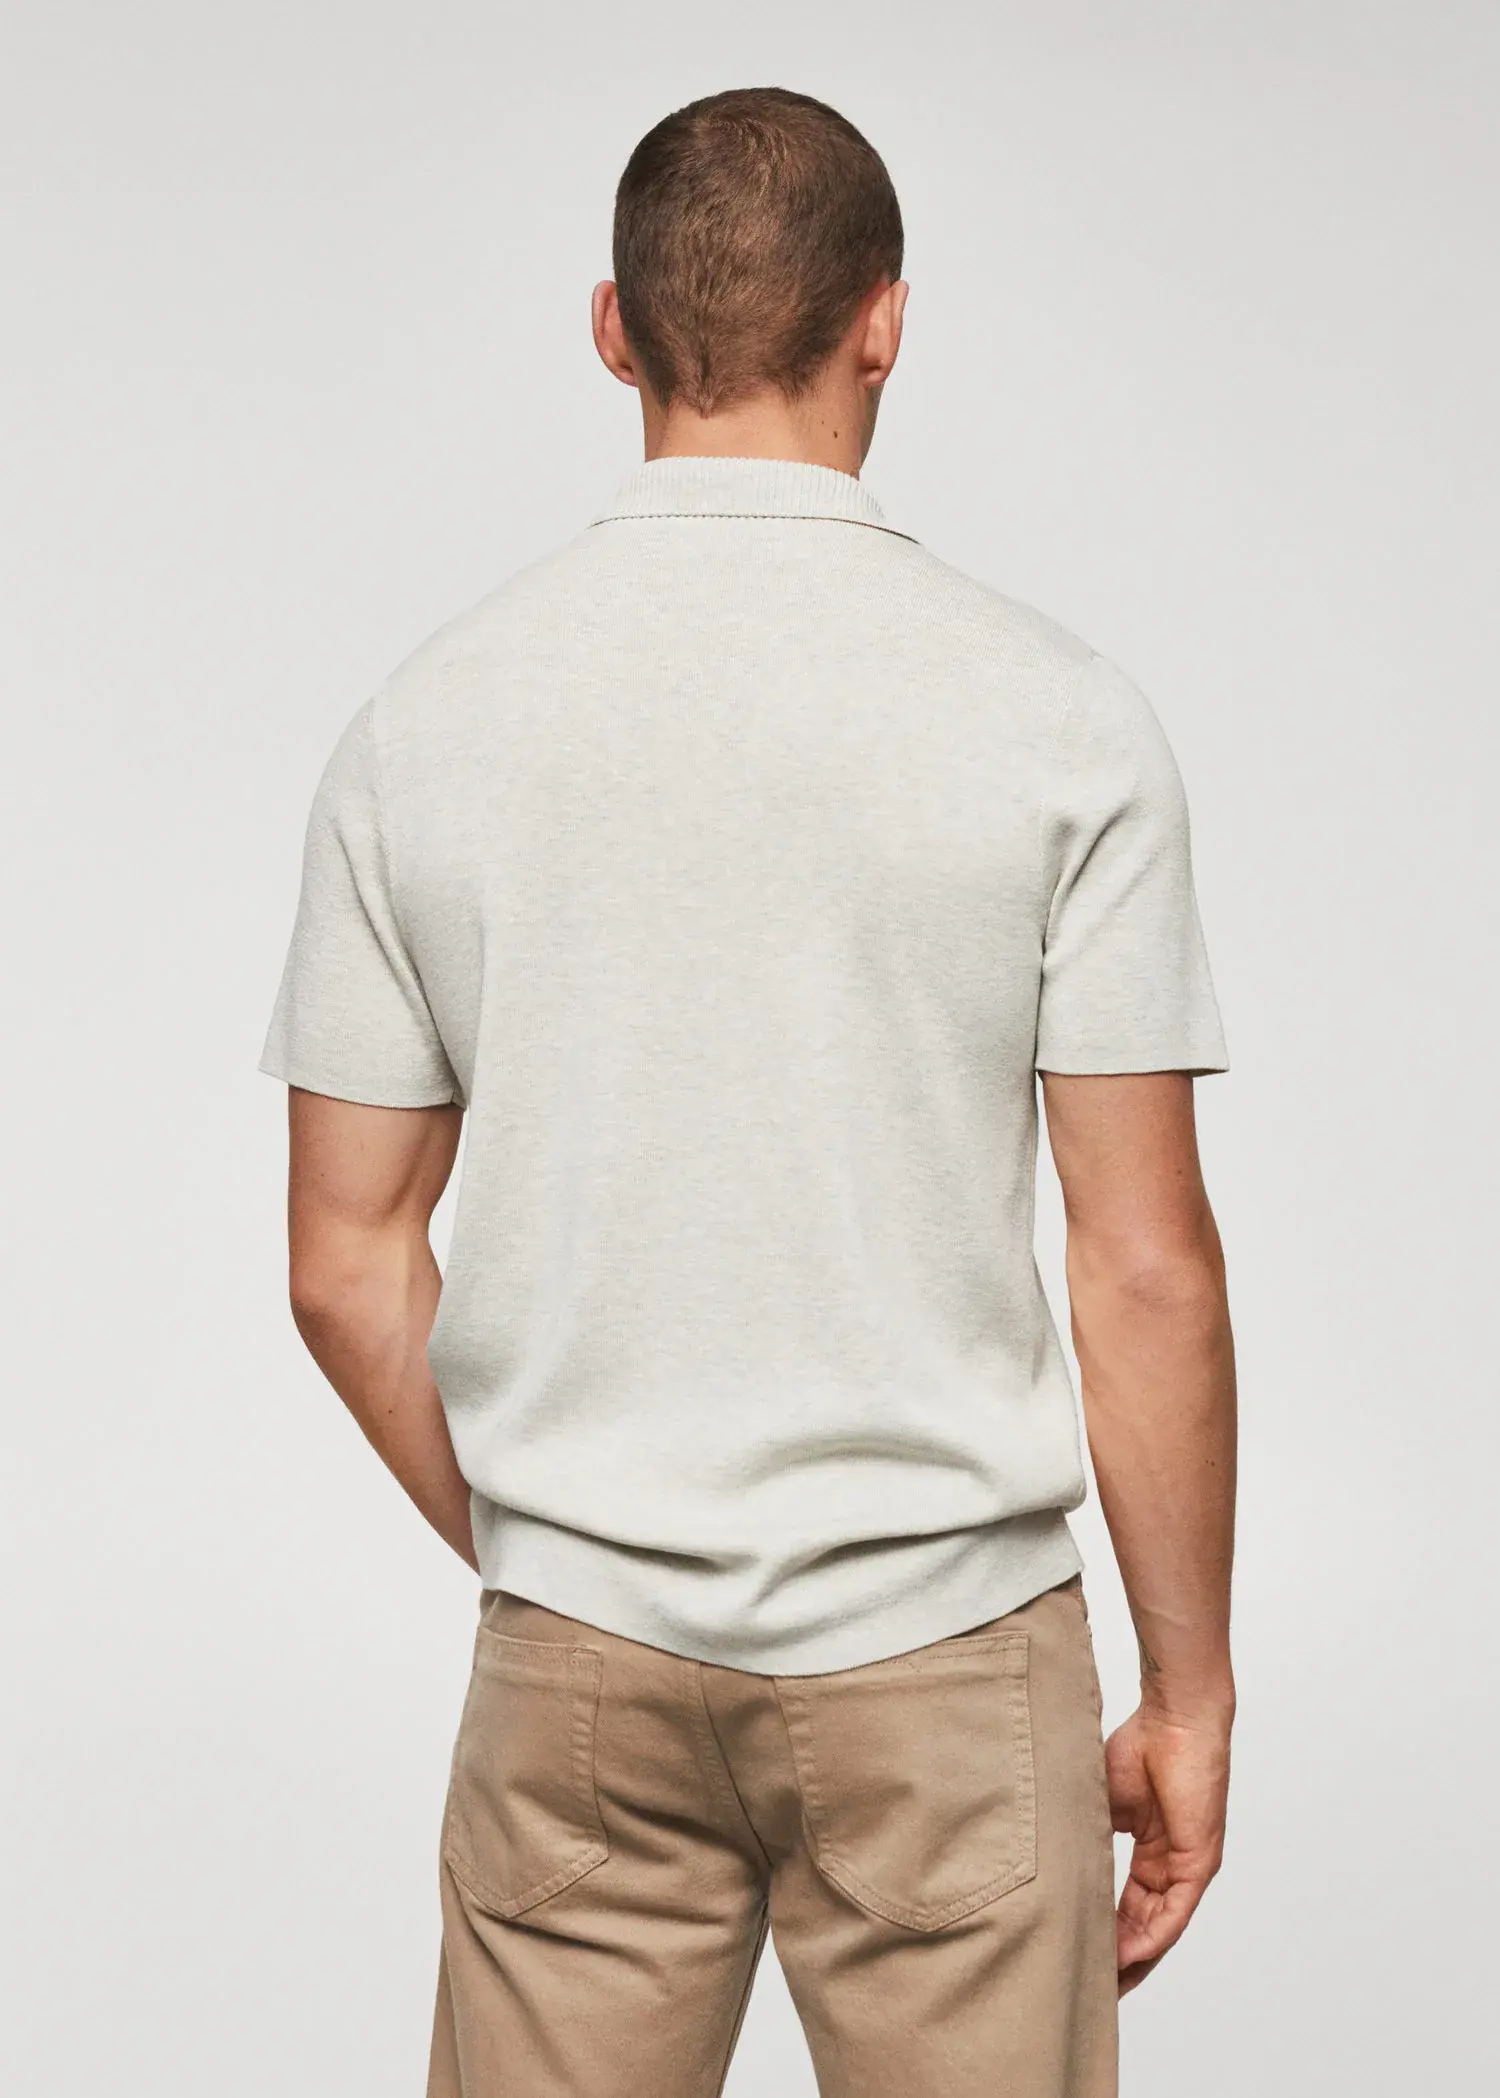 Mango Fine-knit polo shirt. a man in a white shirt and brown pants. 